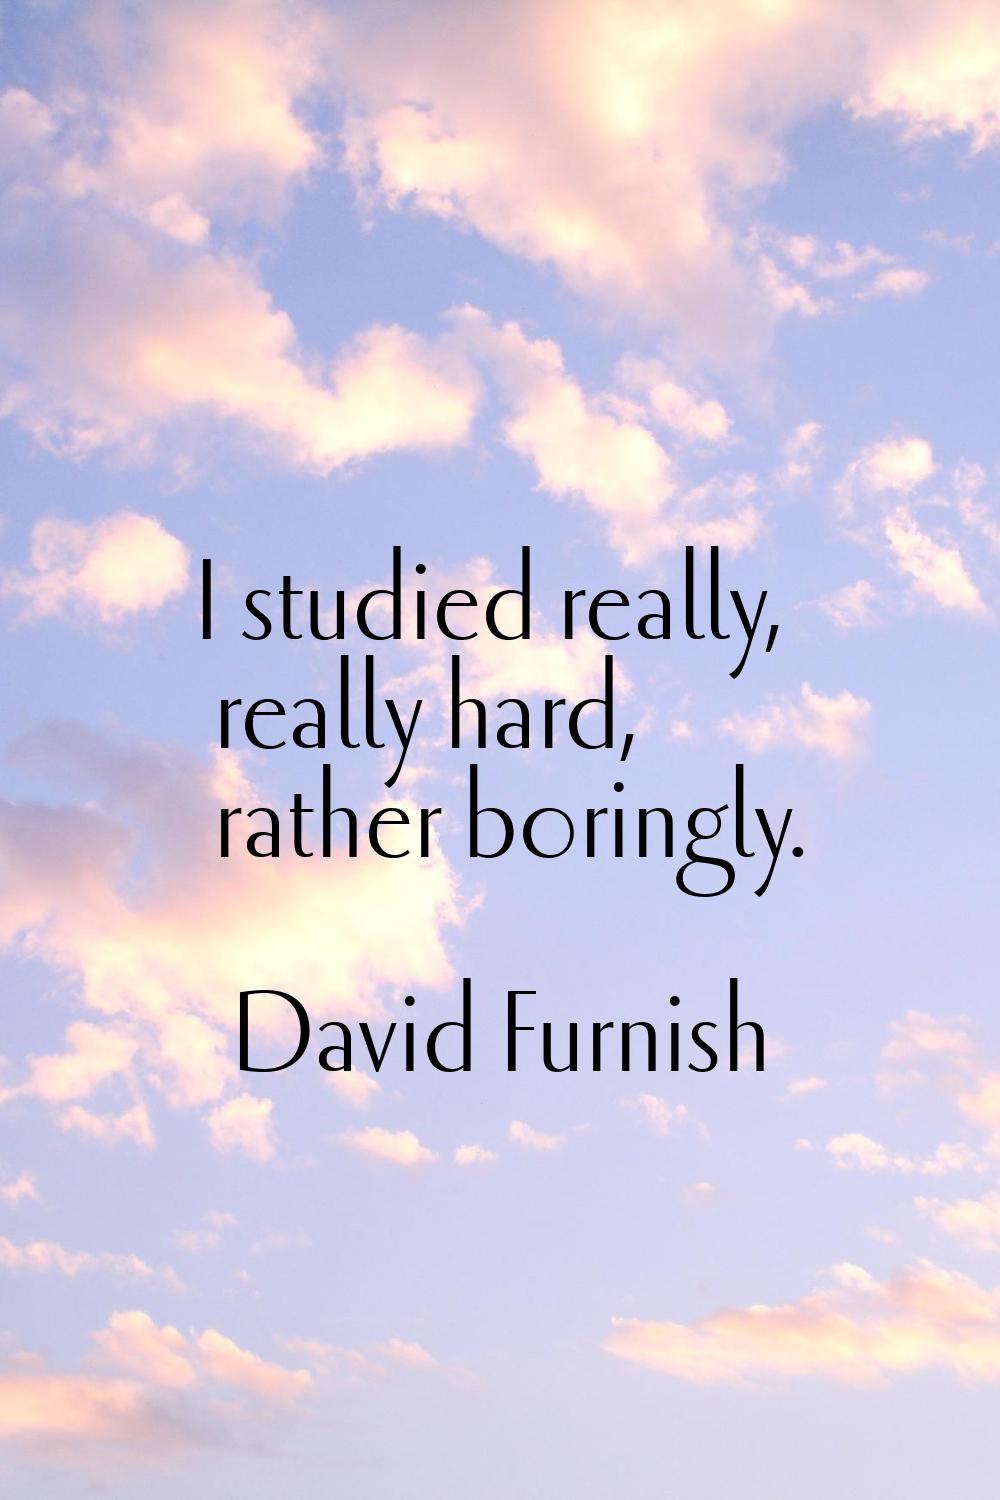 I studied really, really hard, rather boringly.